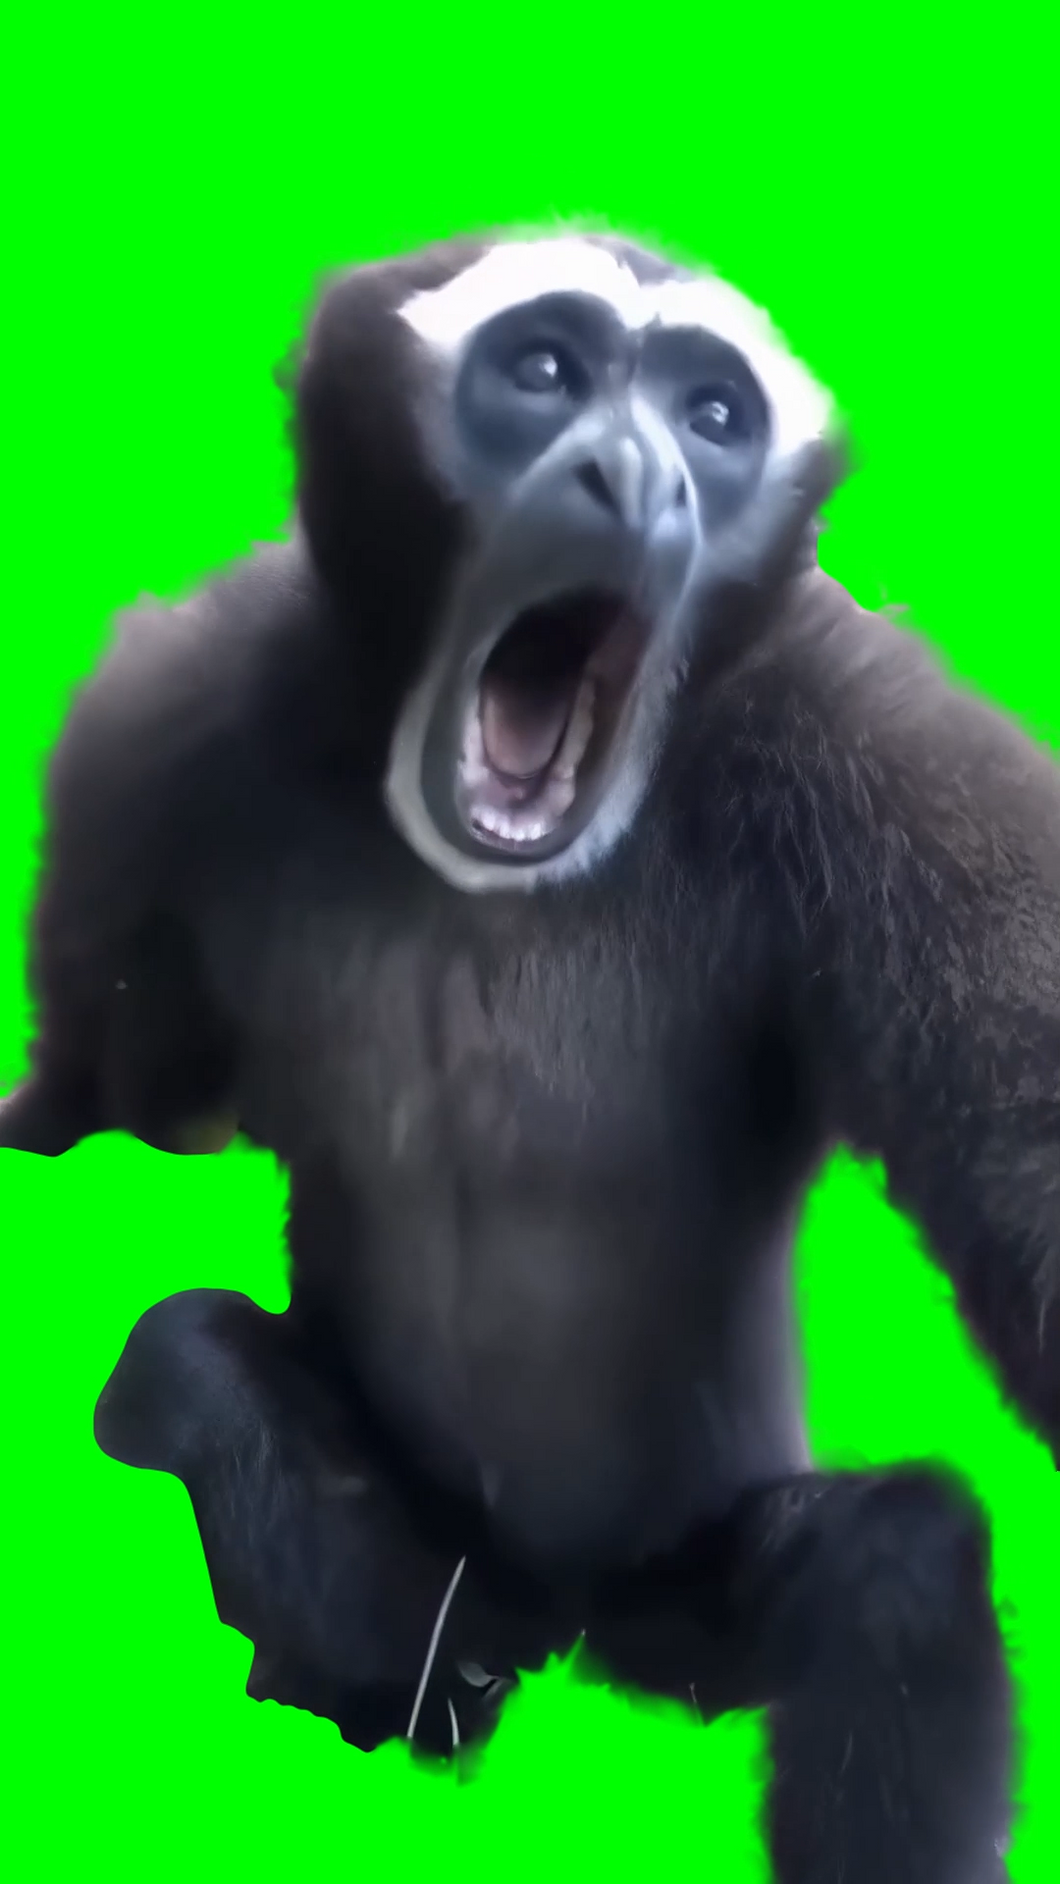 Gibbon Monkey screaming meme (Green Screen)